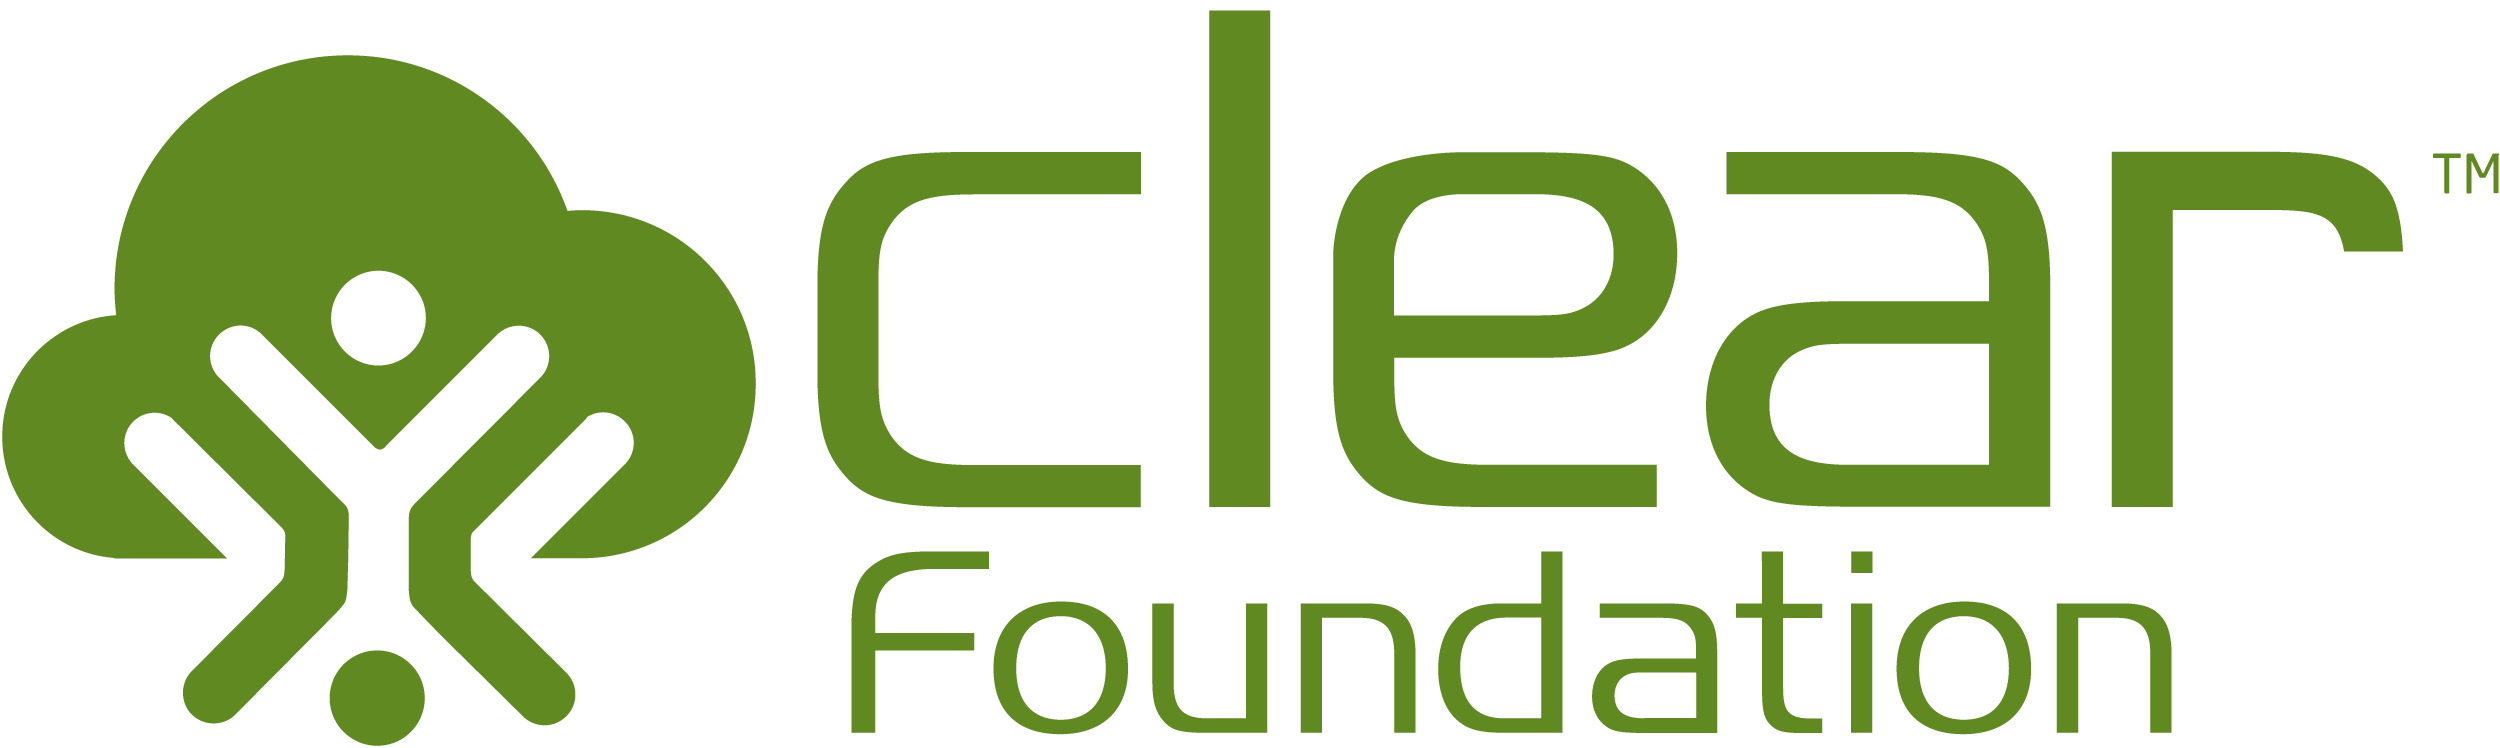 ClearFoundation logo